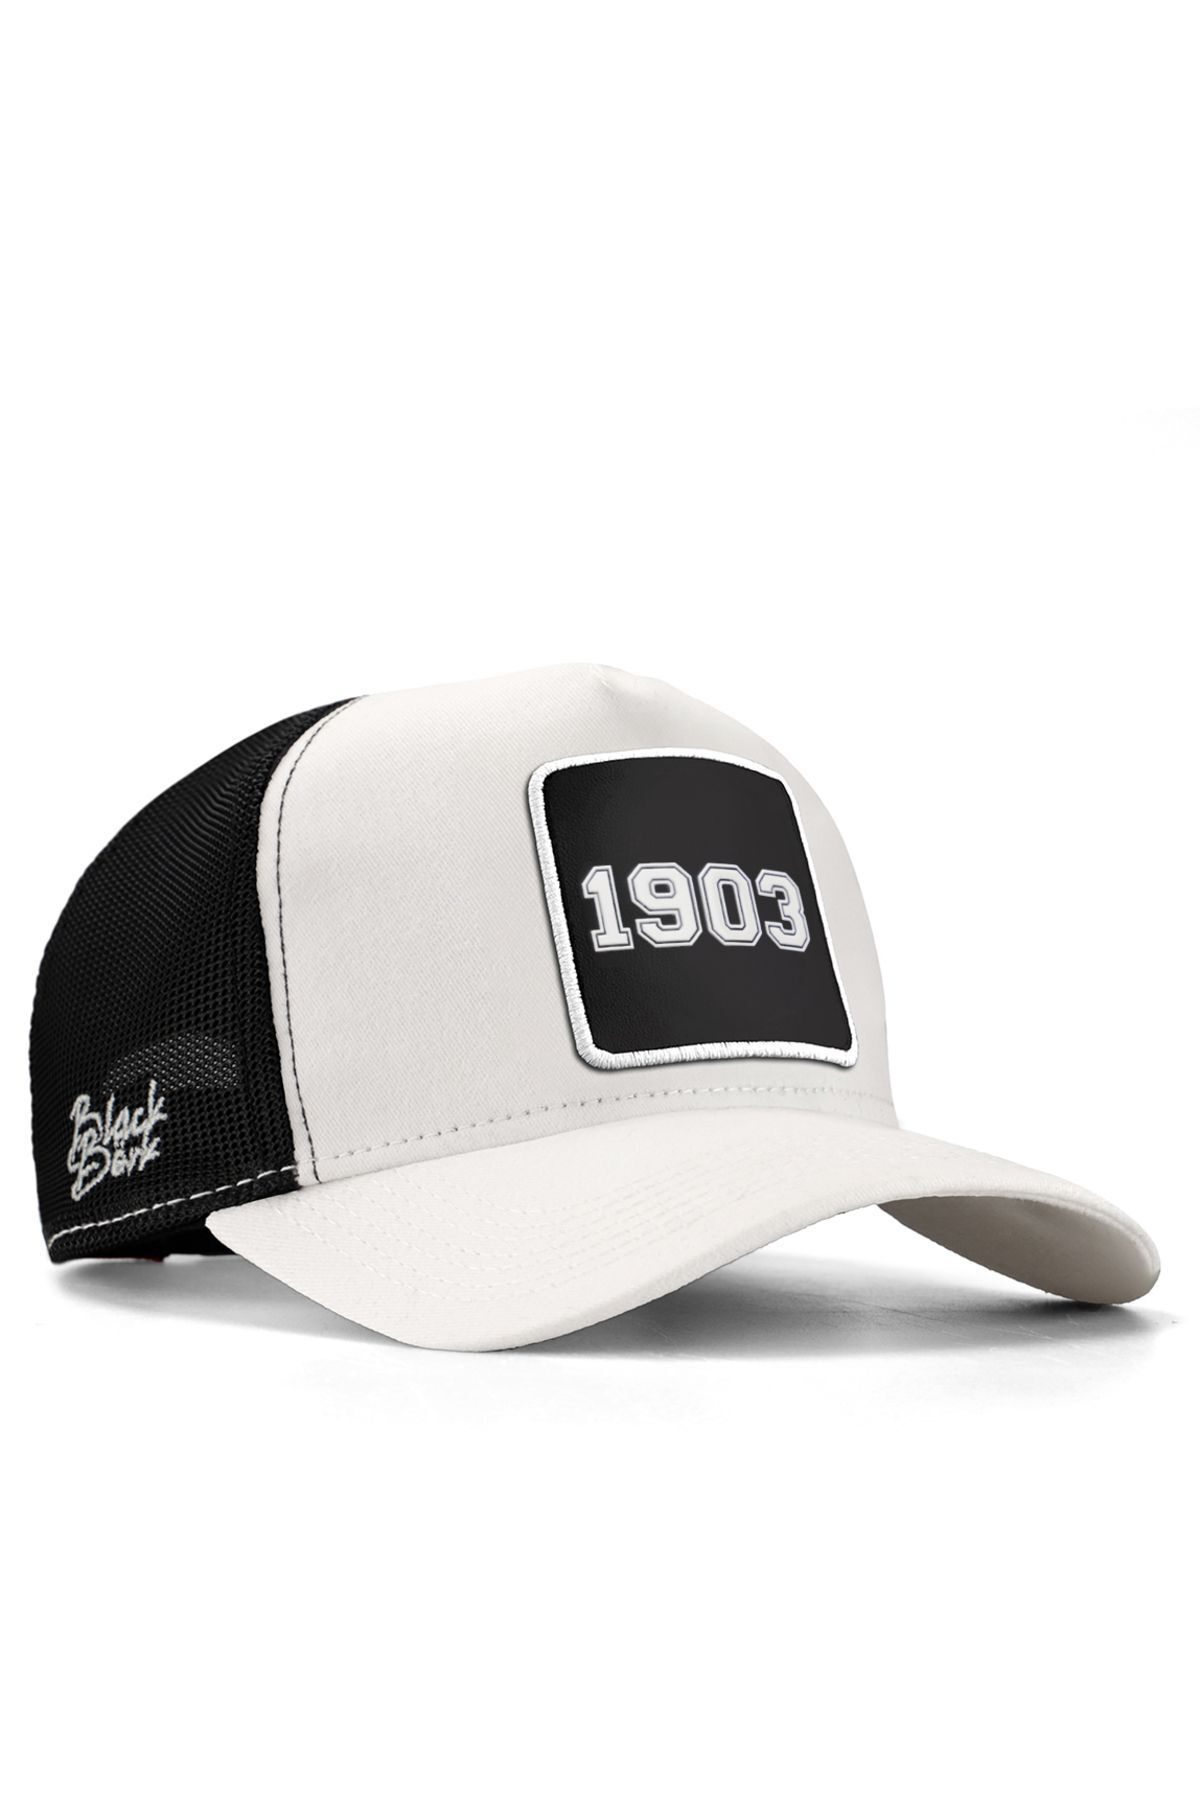 BlackBörk V1 Trucker 1903 - 1sb Kod Logolu Unisex Beyaz-siyah Şapka (CAP)